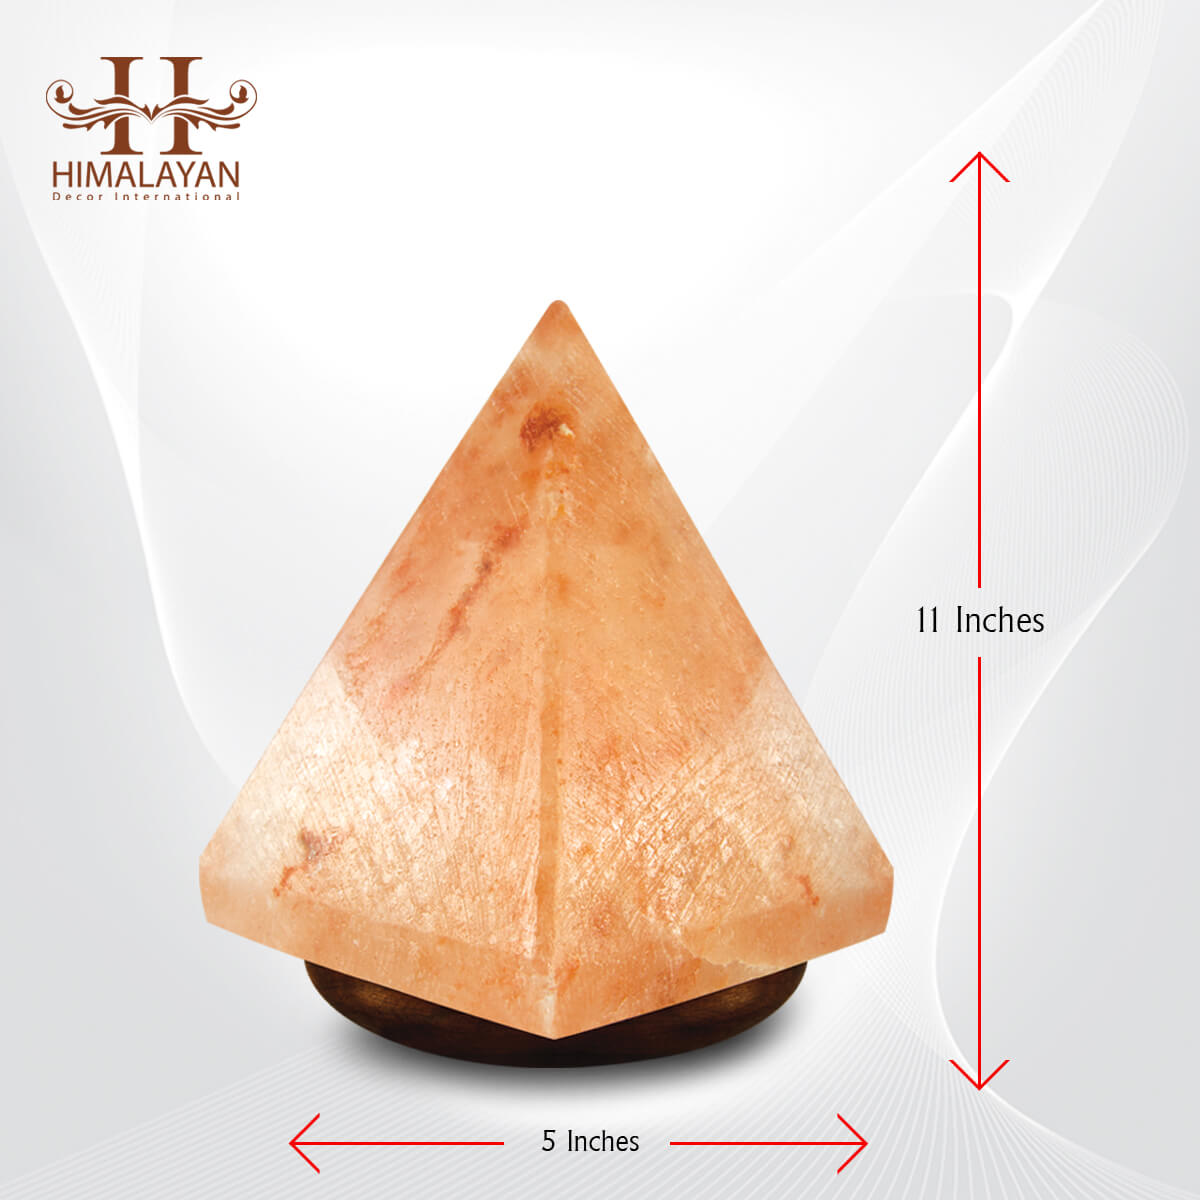 Hand-cut Pure Natural Organic Himalayan Salt USB Lamp 4-6 Inches Height Rare White Pyramid 